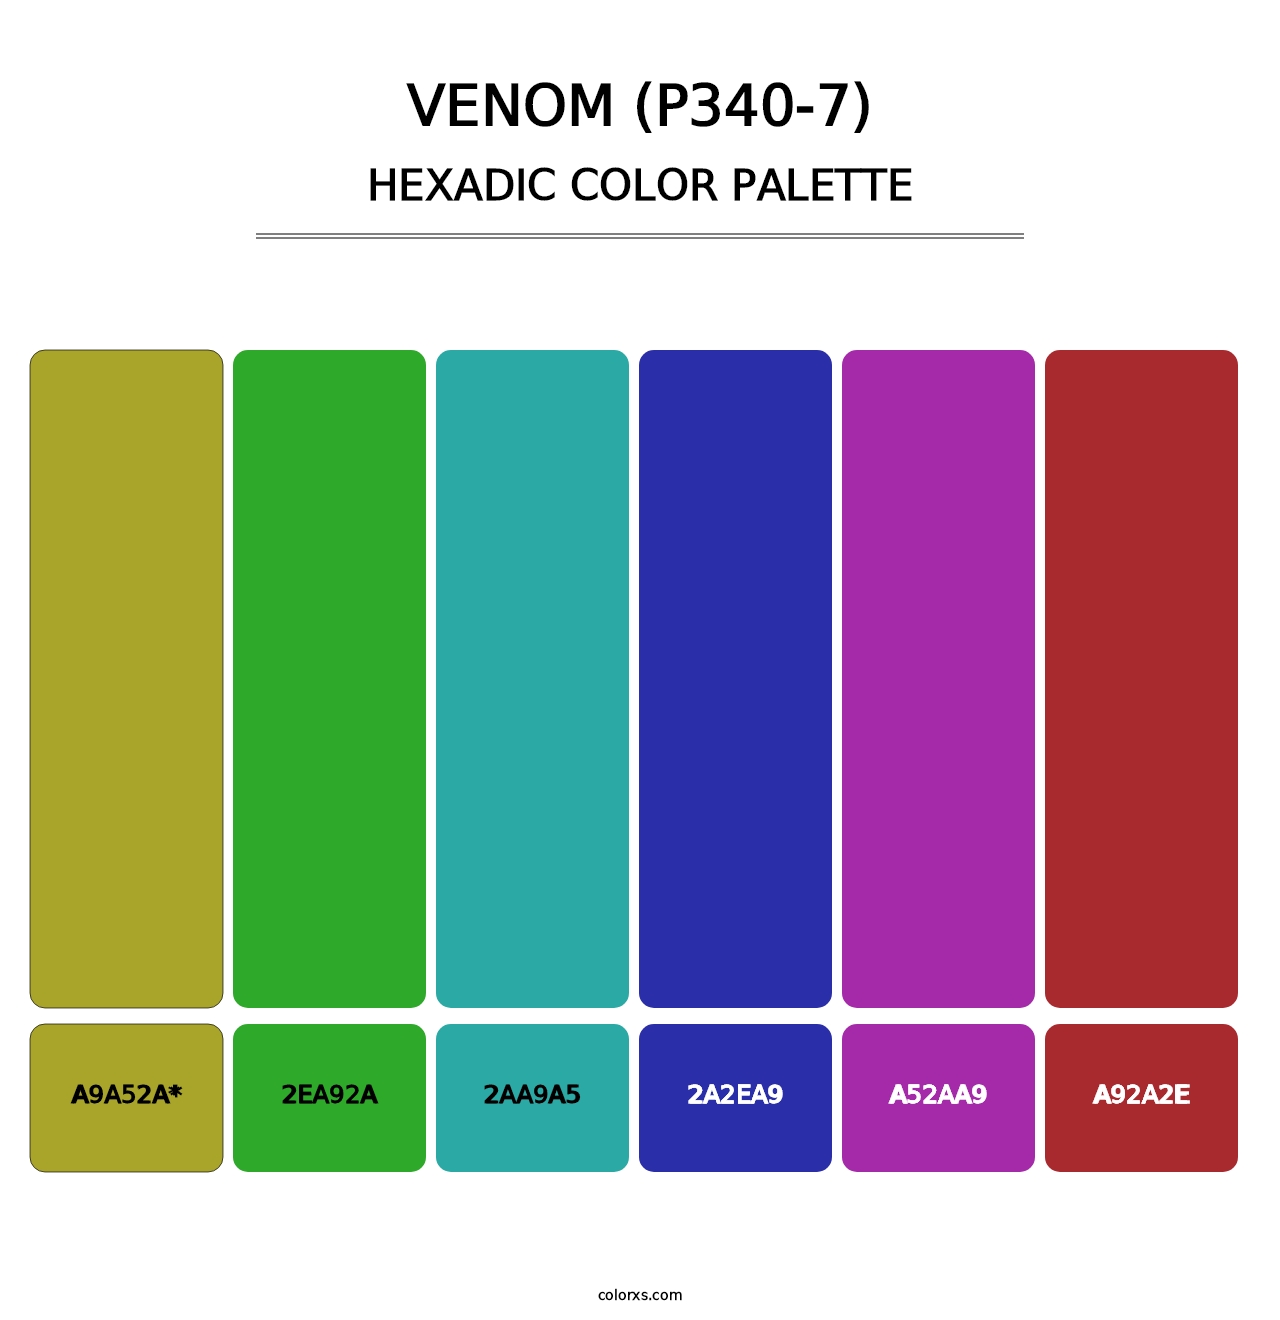 Venom (P340-7) - Hexadic Color Palette